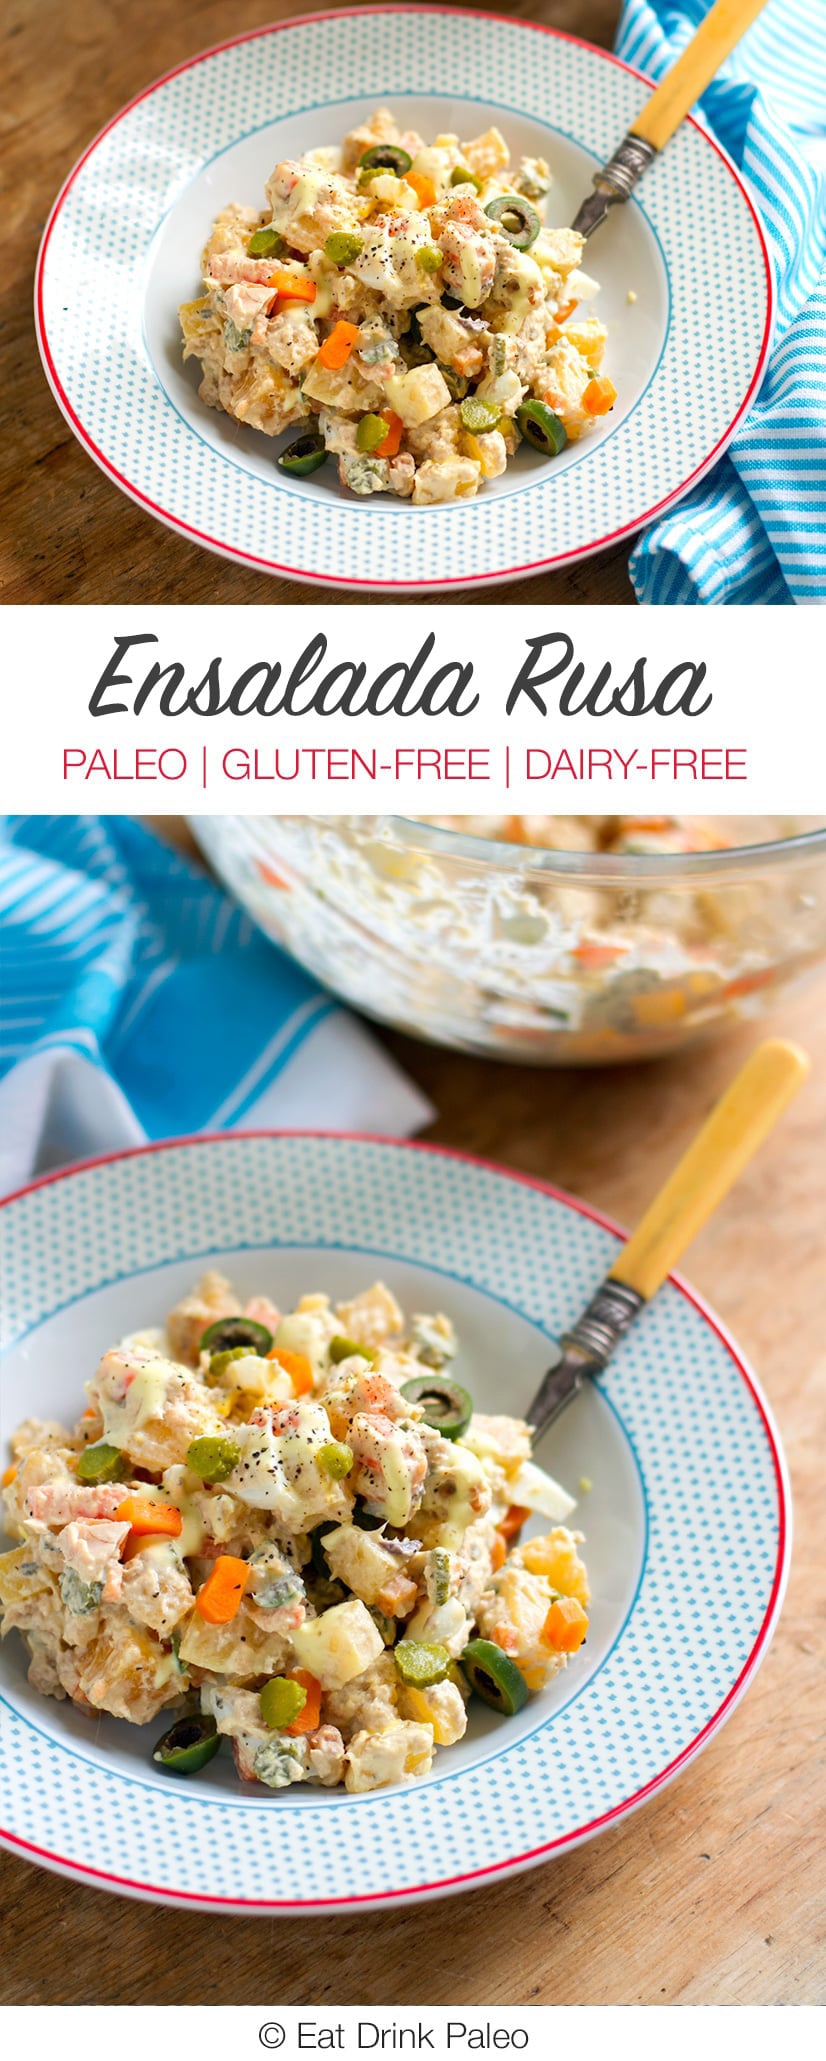 Ensalada Rusa Recipe - Gluten-free, Dairy-free, Paleo friendly potato salad. 